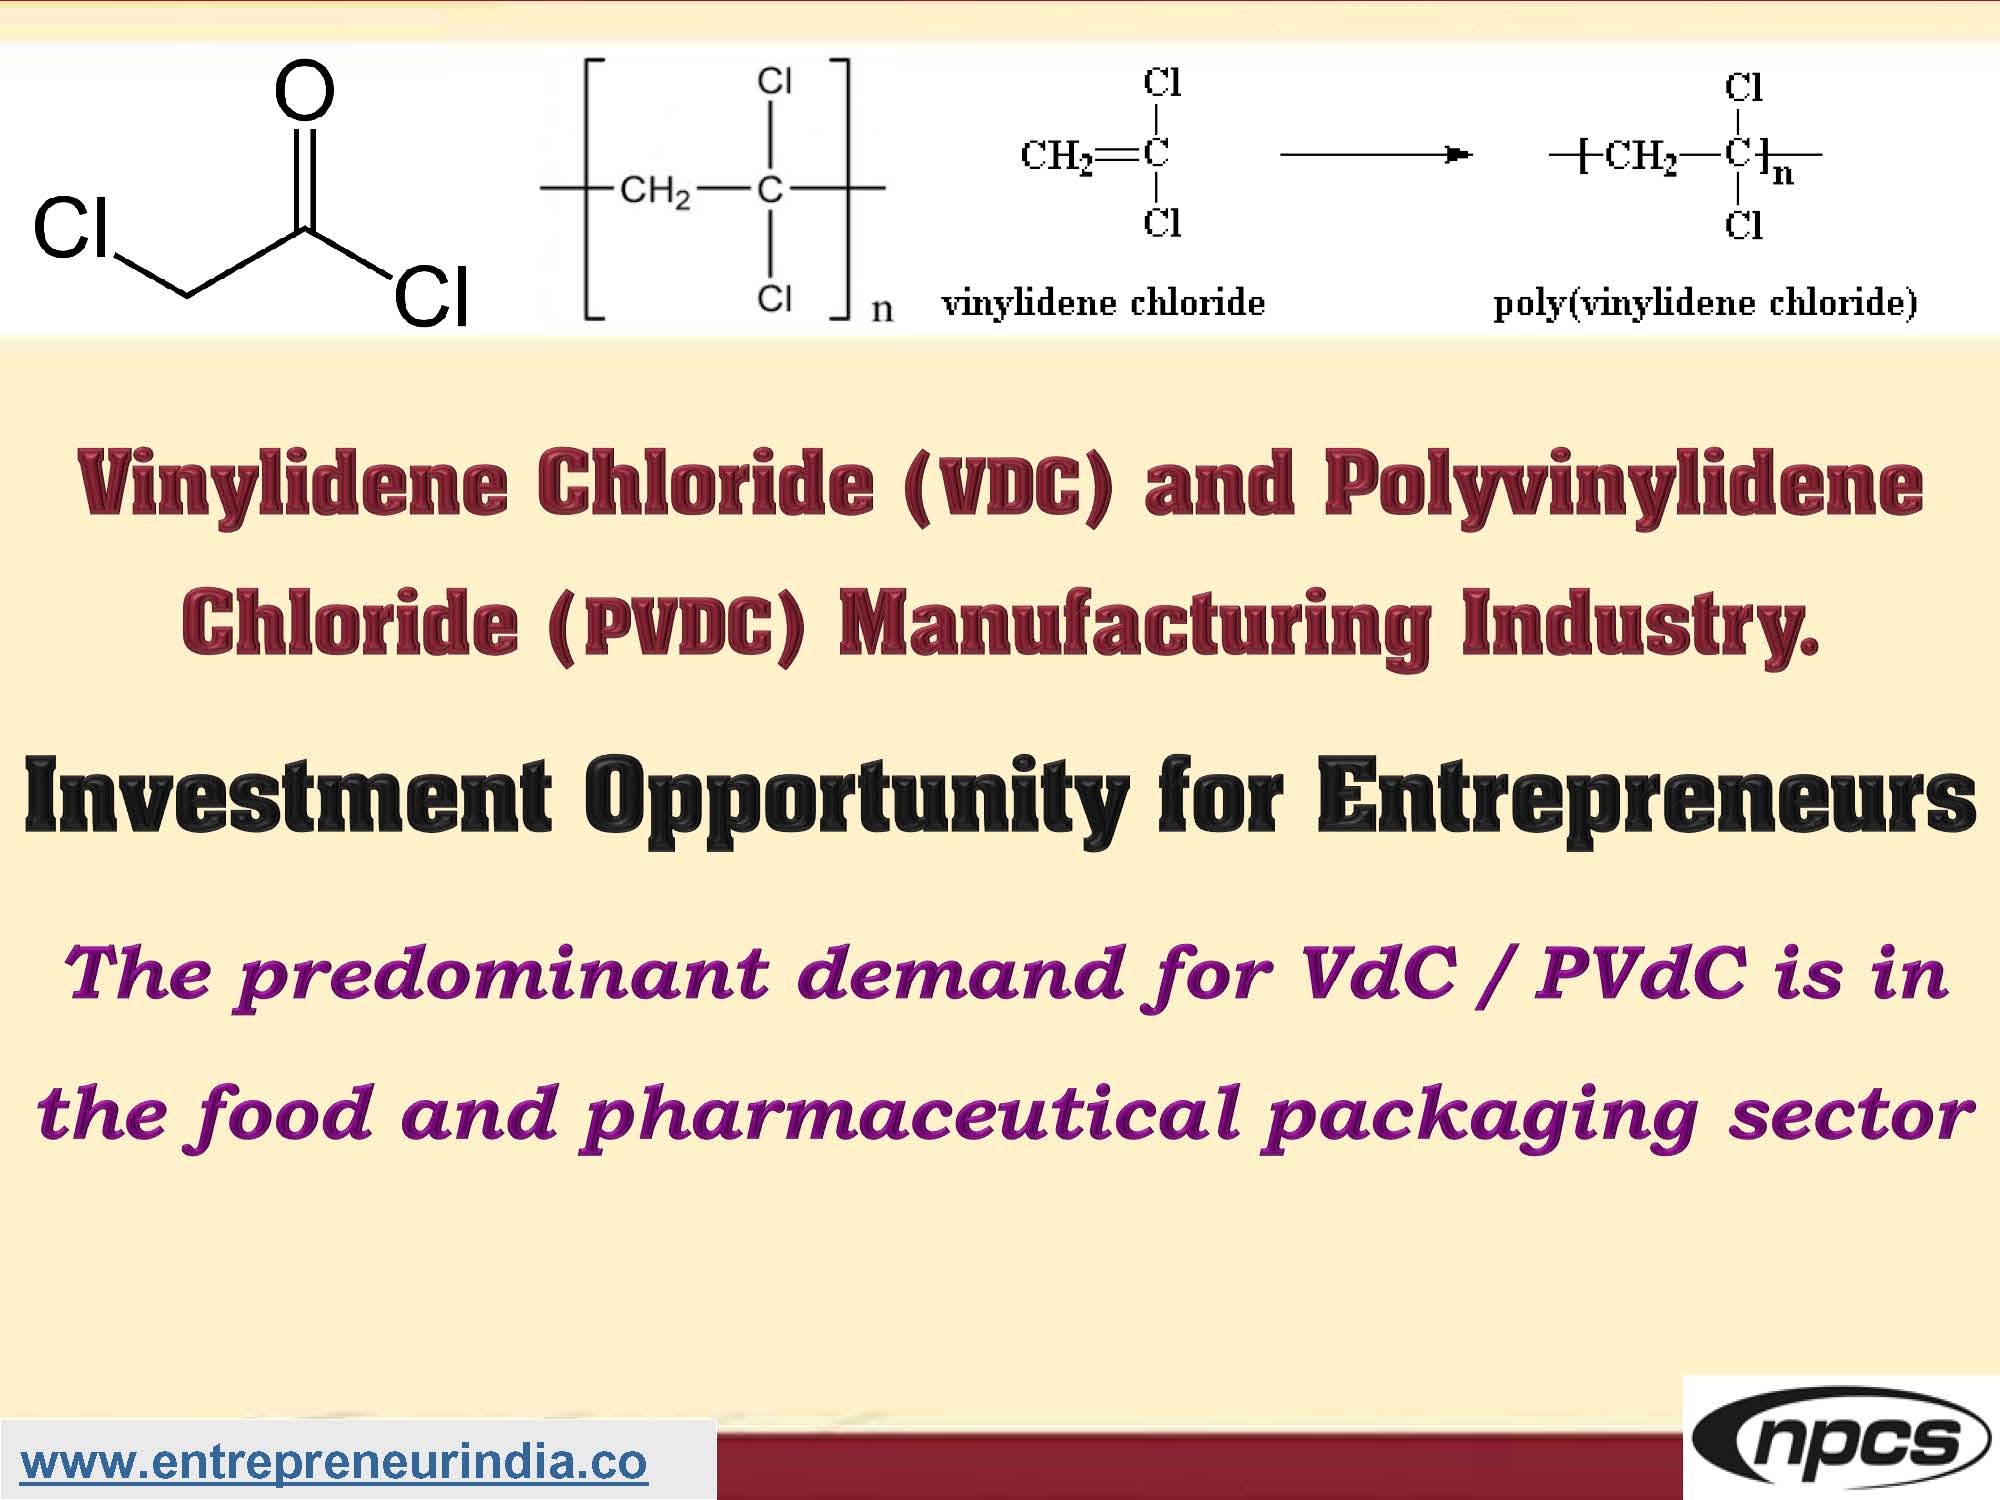 Vinylidene Chloride (VDC) and Polyvinylidene Chloride (PVDC) Manufacturing Industry